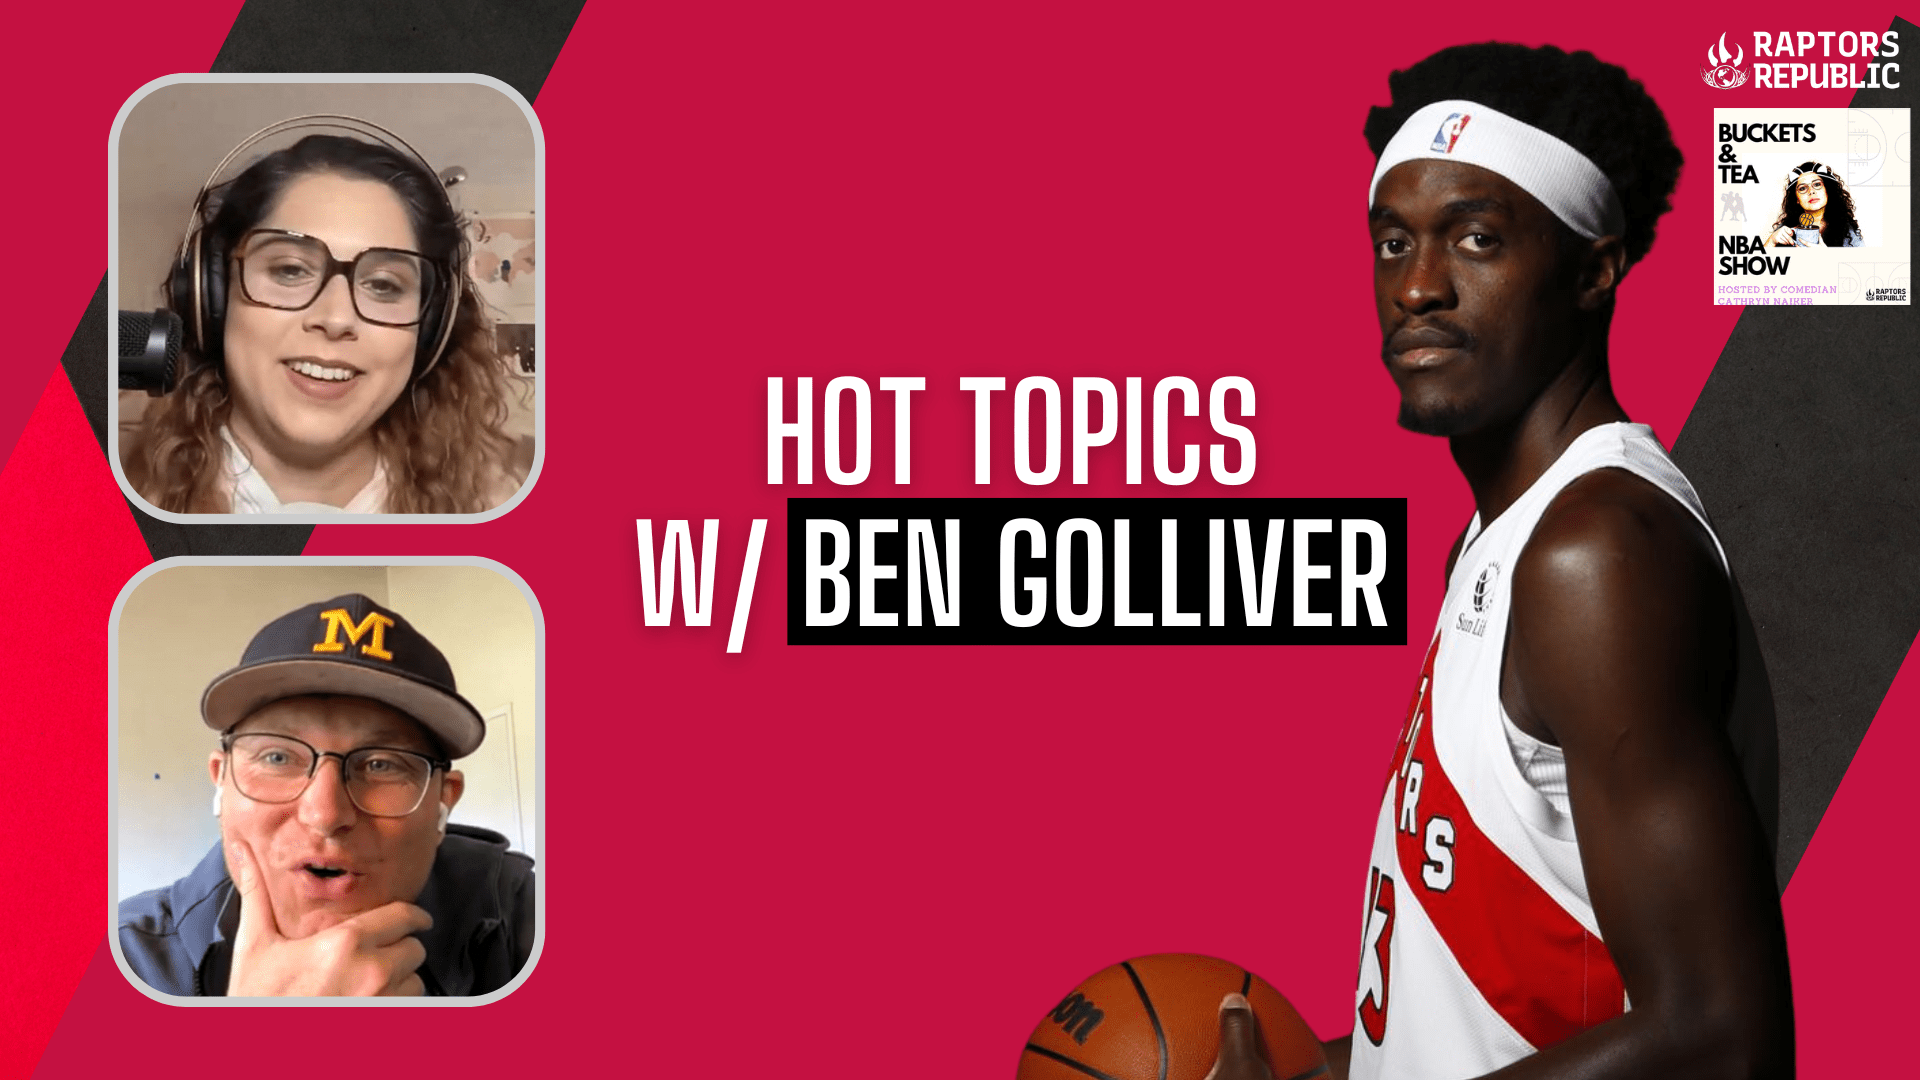 Hot Topics with Ben Golliver – Buckets & Tea NBA Show